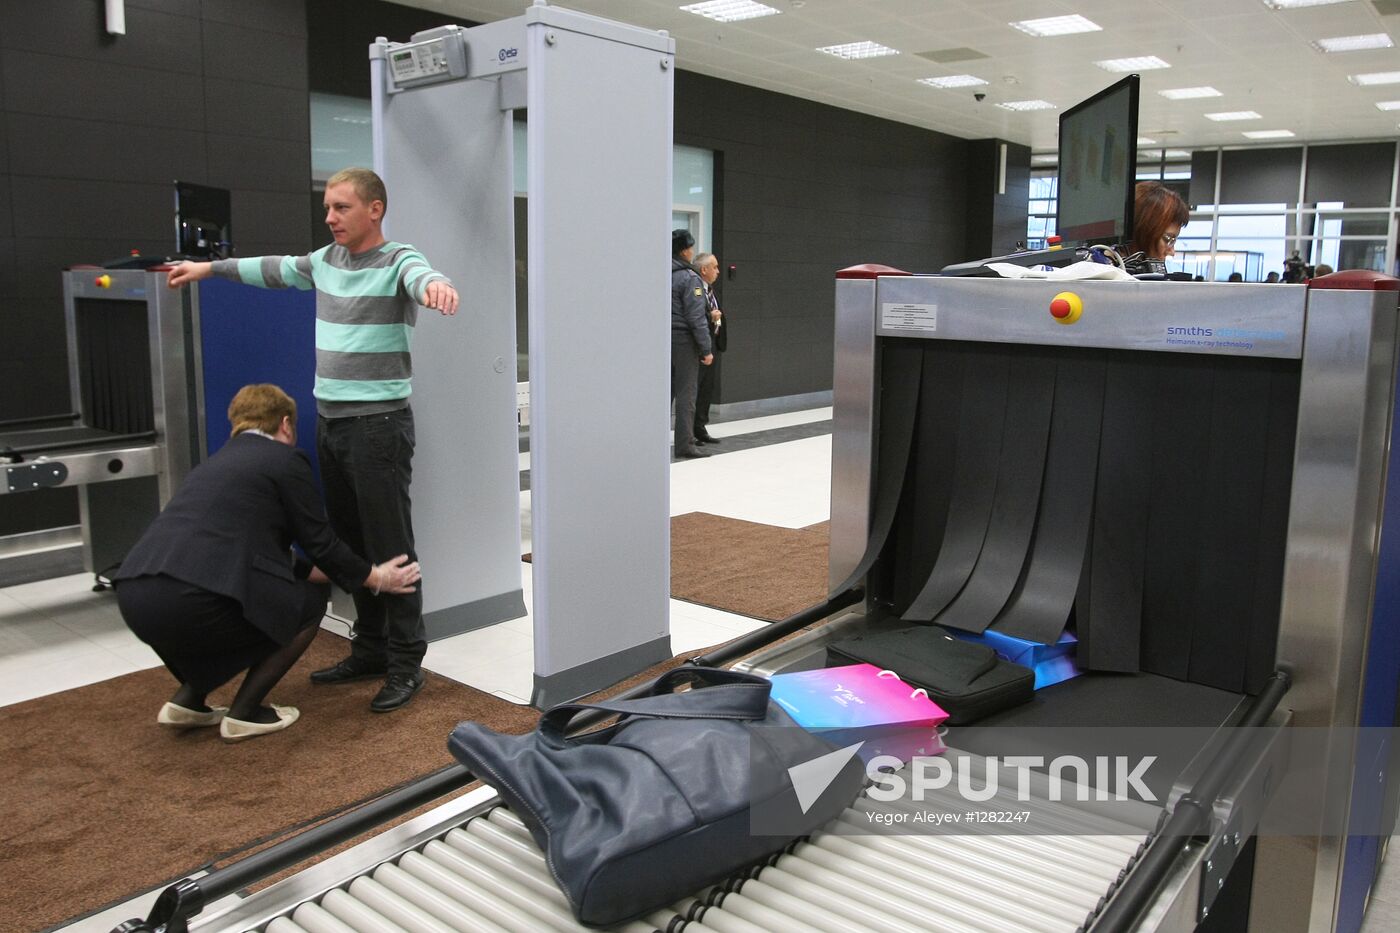 New terminal opens at Kazan airport